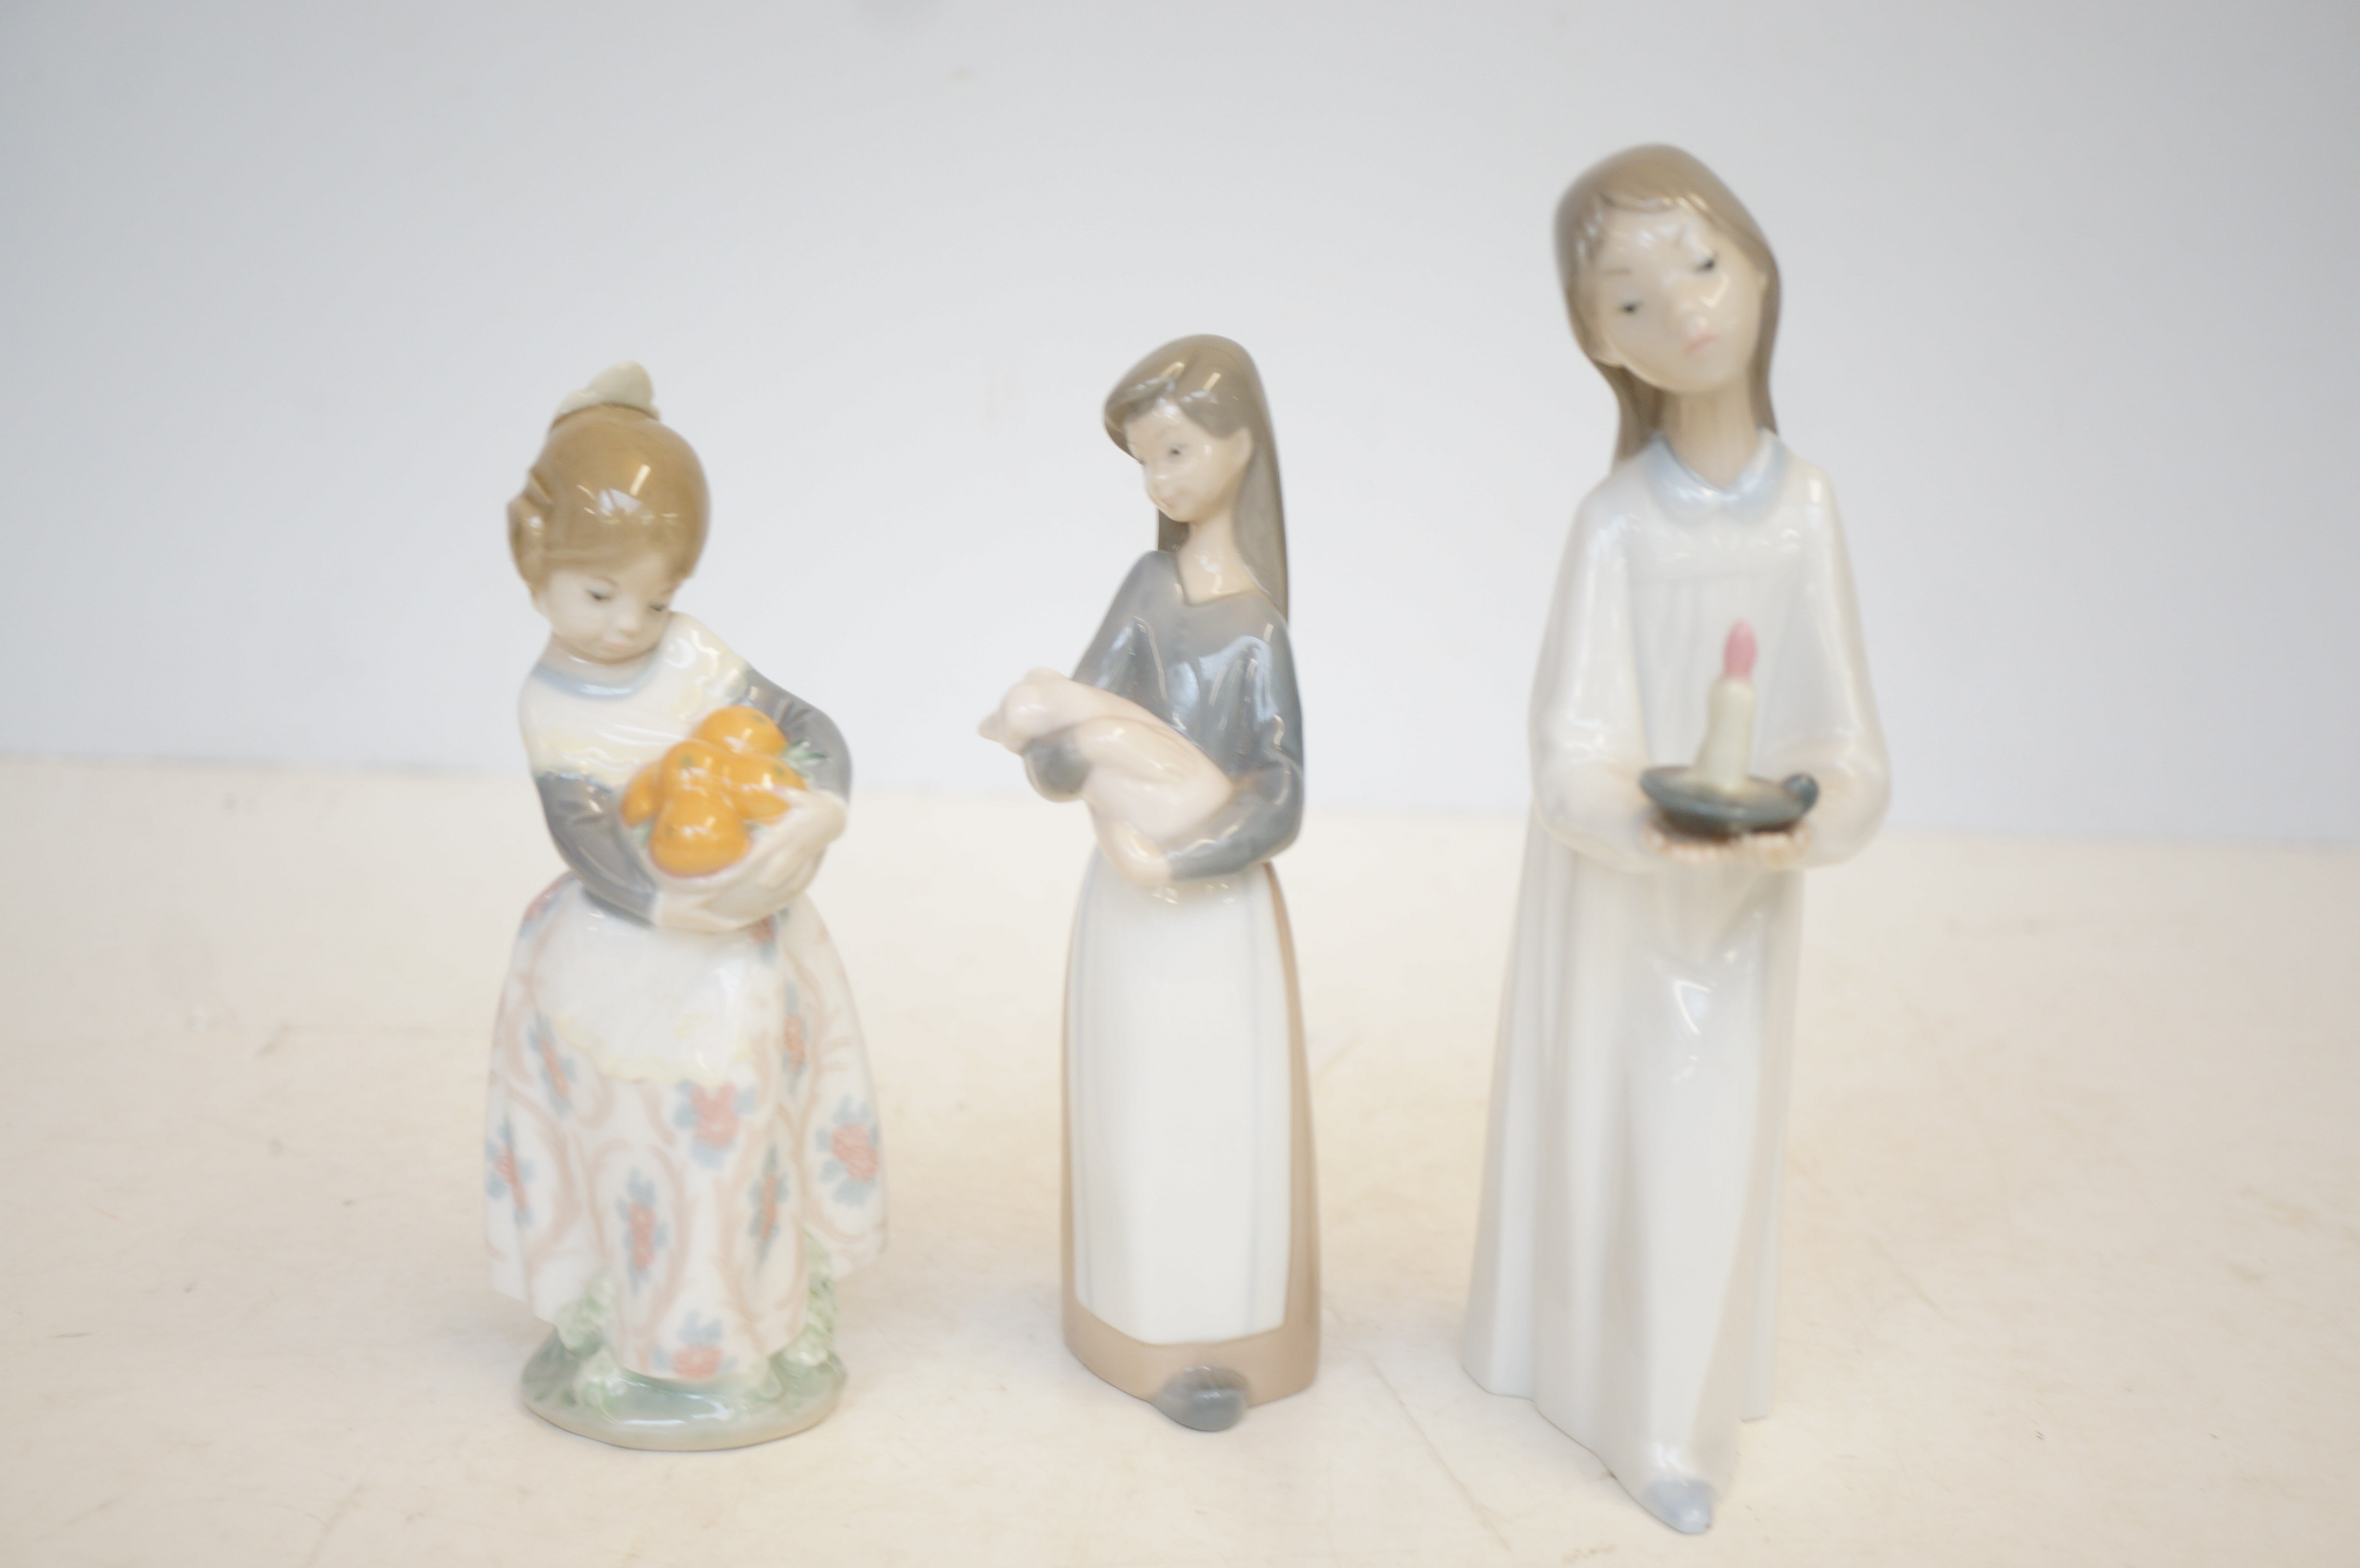 3x Lladro child figurines